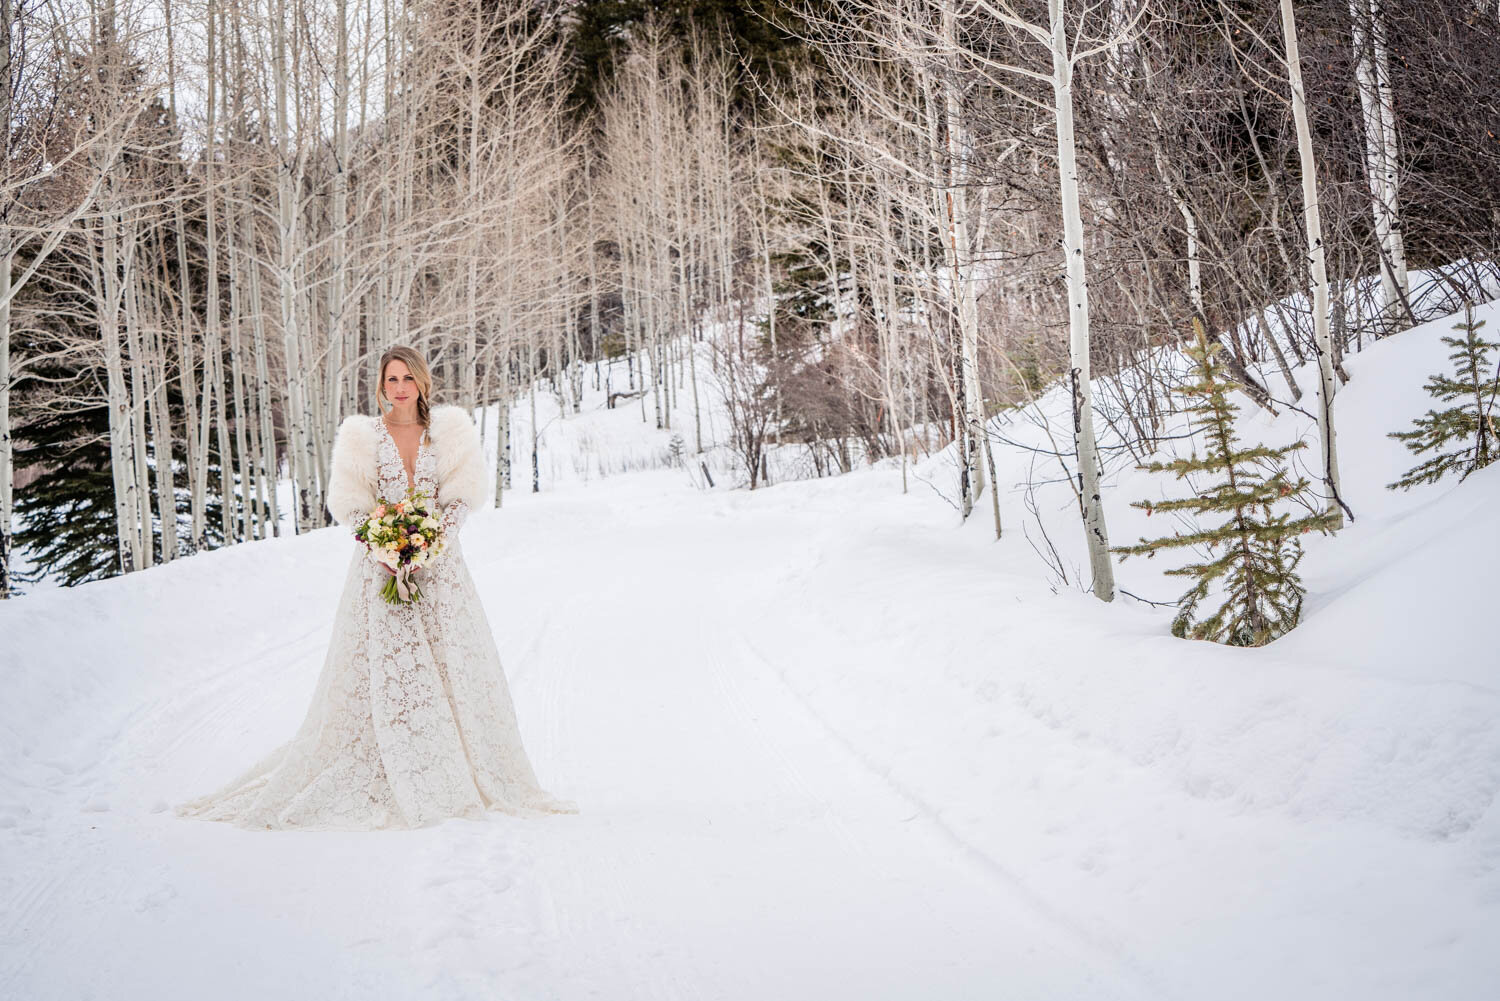  Redstone Castle Styled Wedding by Aspen Colorado photographer, JMGant Photography 